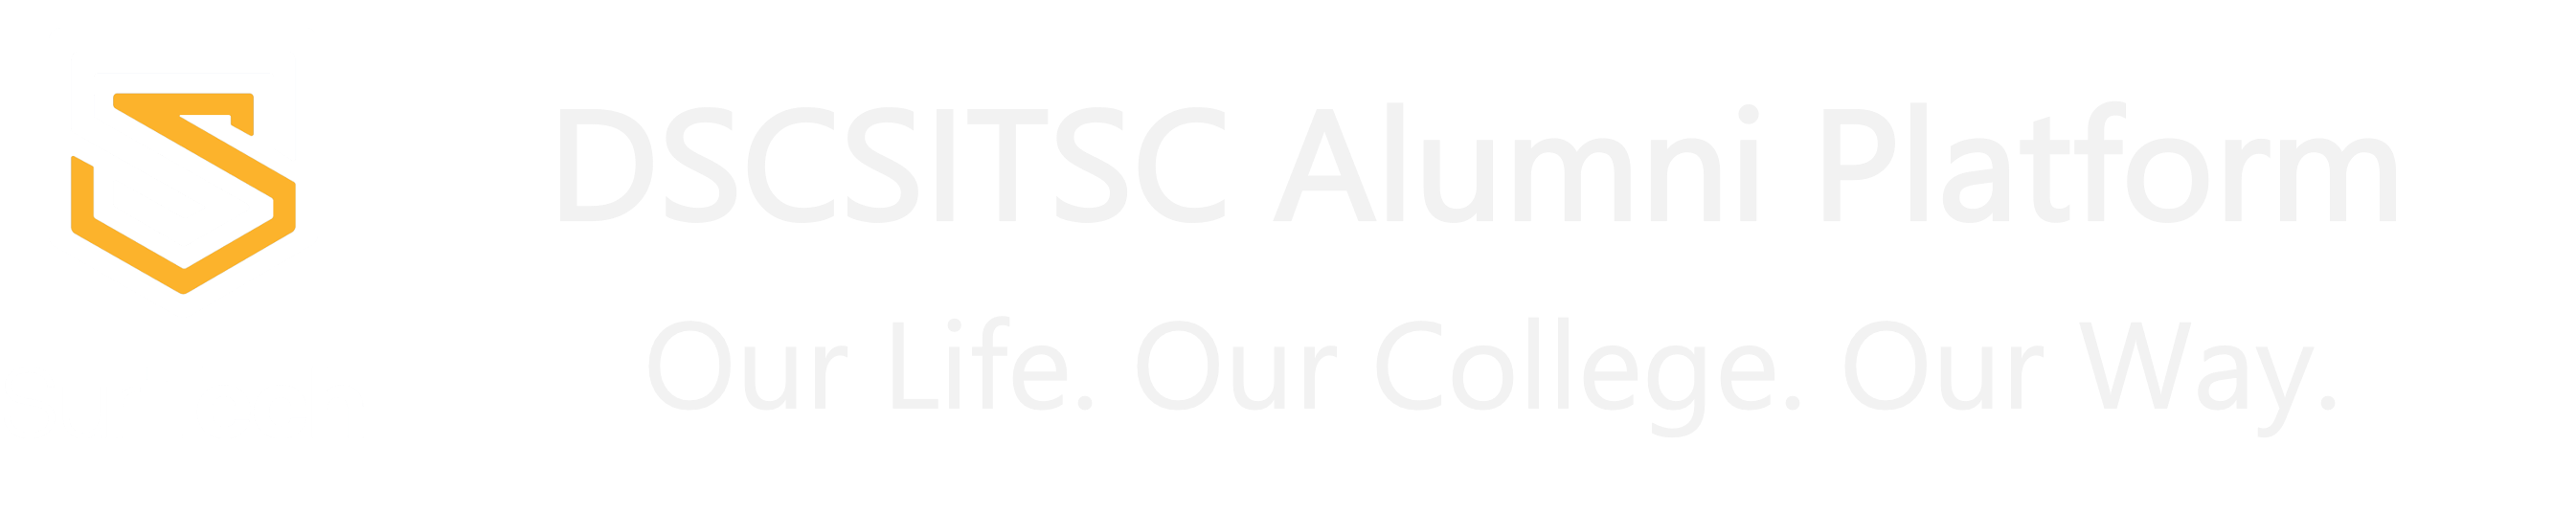 surtech_alumni_logo_footer